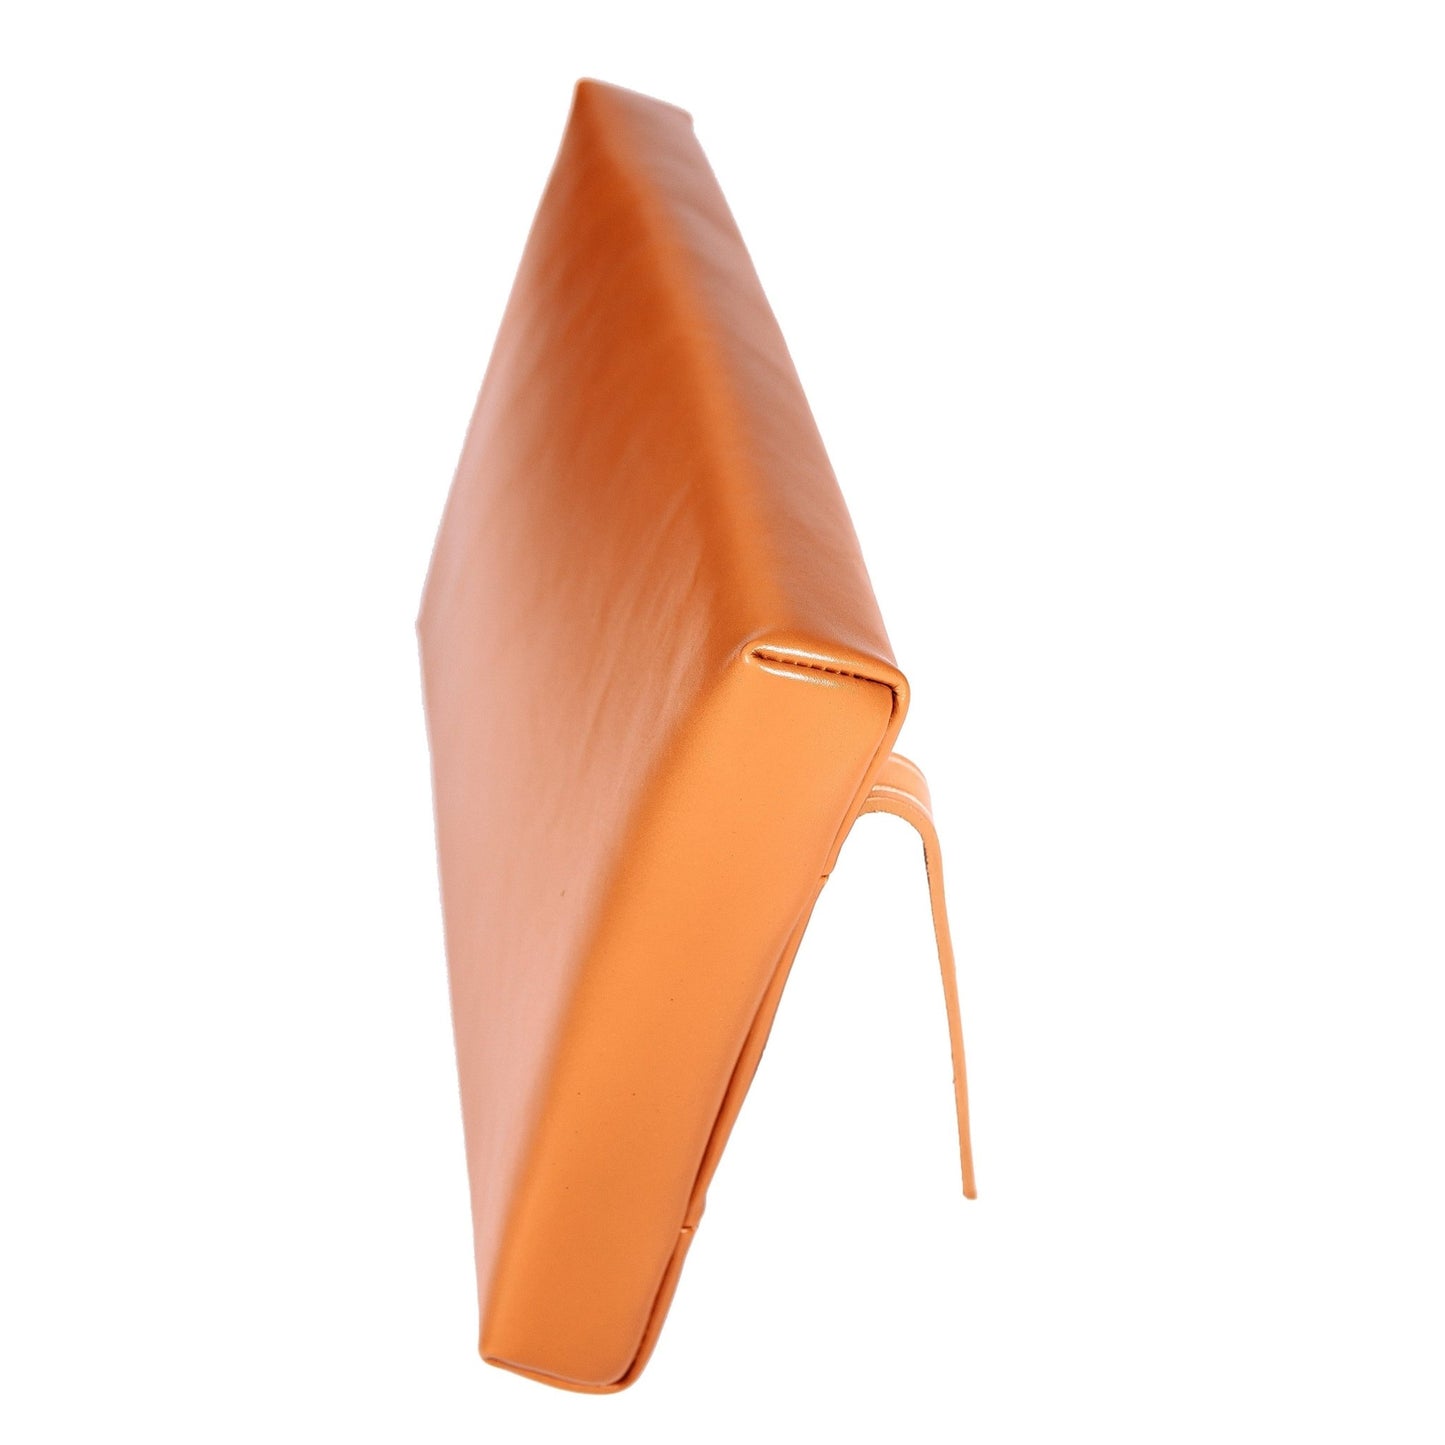 Pillow for a Chaise Longue Chair CLASSIC CHALET - UKRAINIAN PRODUCT DESIGN